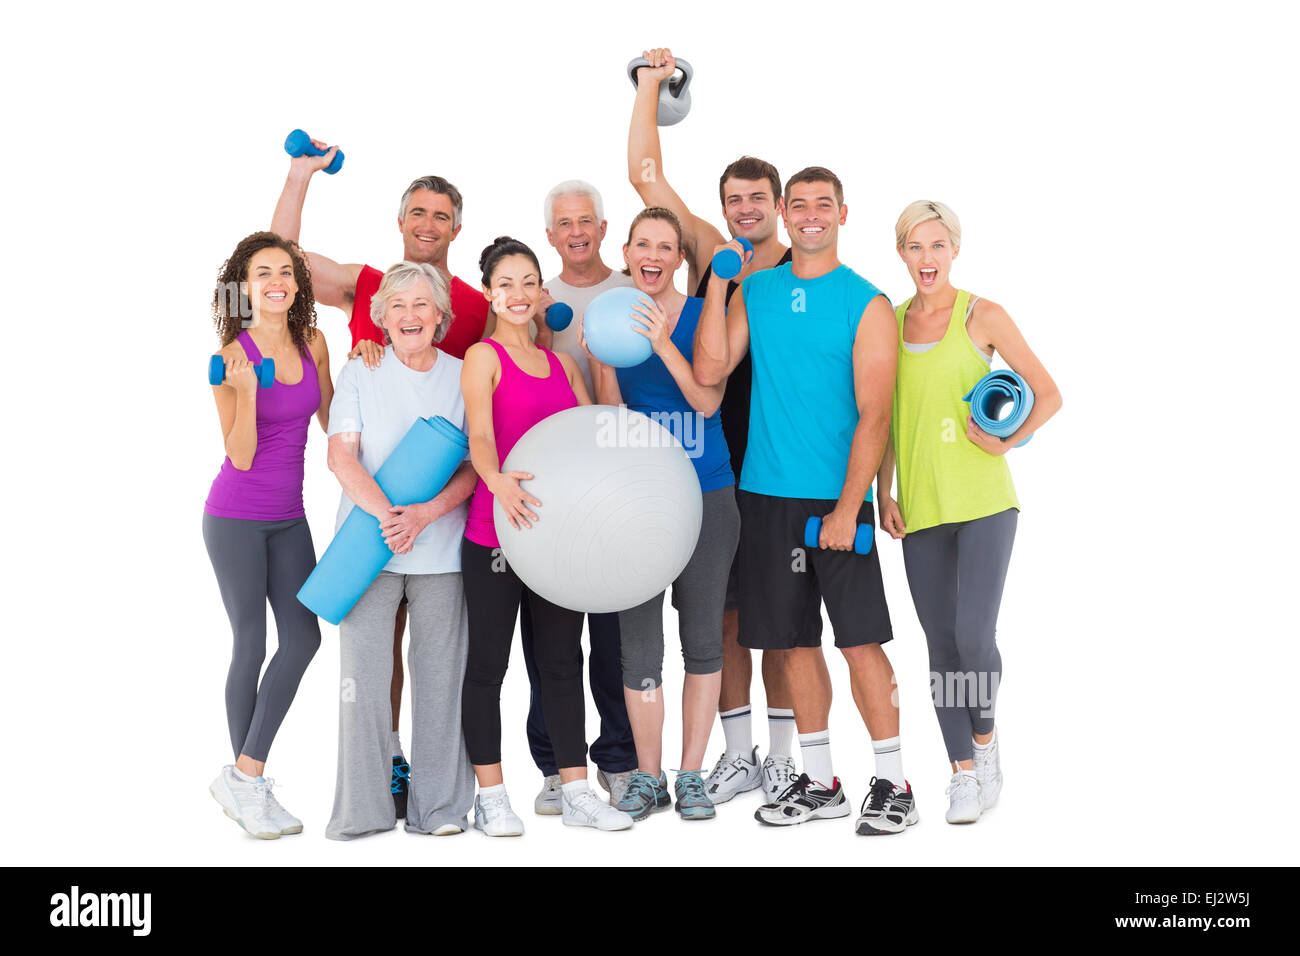 Happy people with exercise equipment Stock Photo